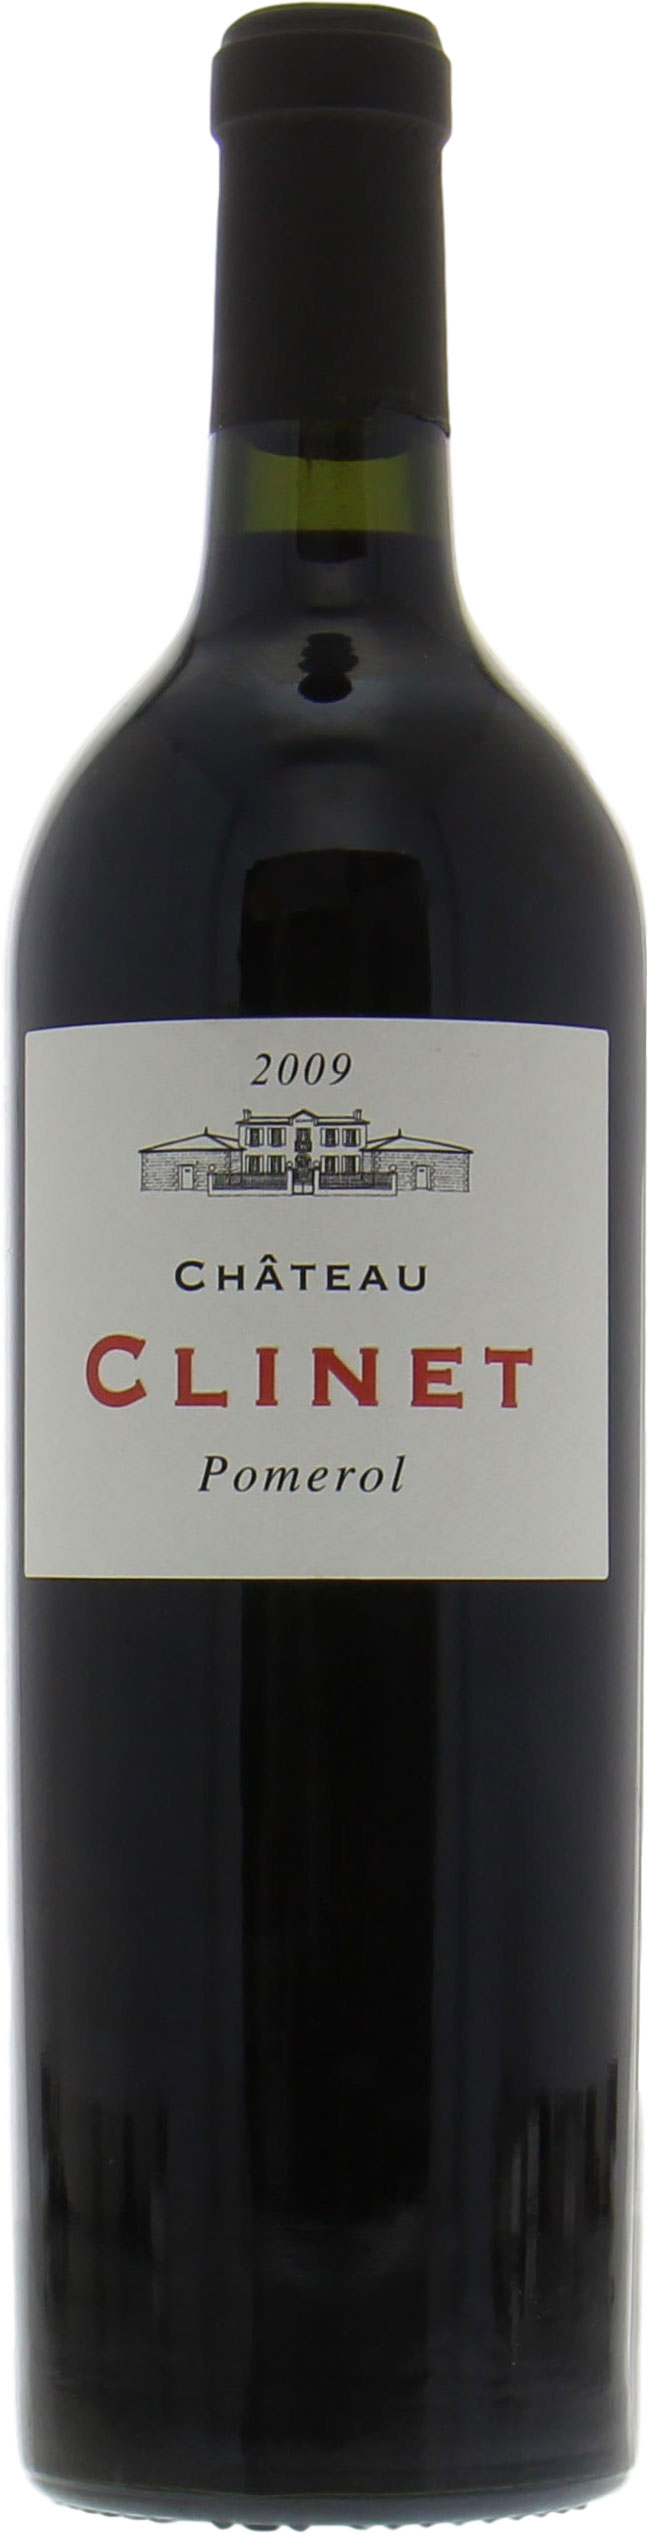 Chateau Clinet - Chateau Clinet 2009